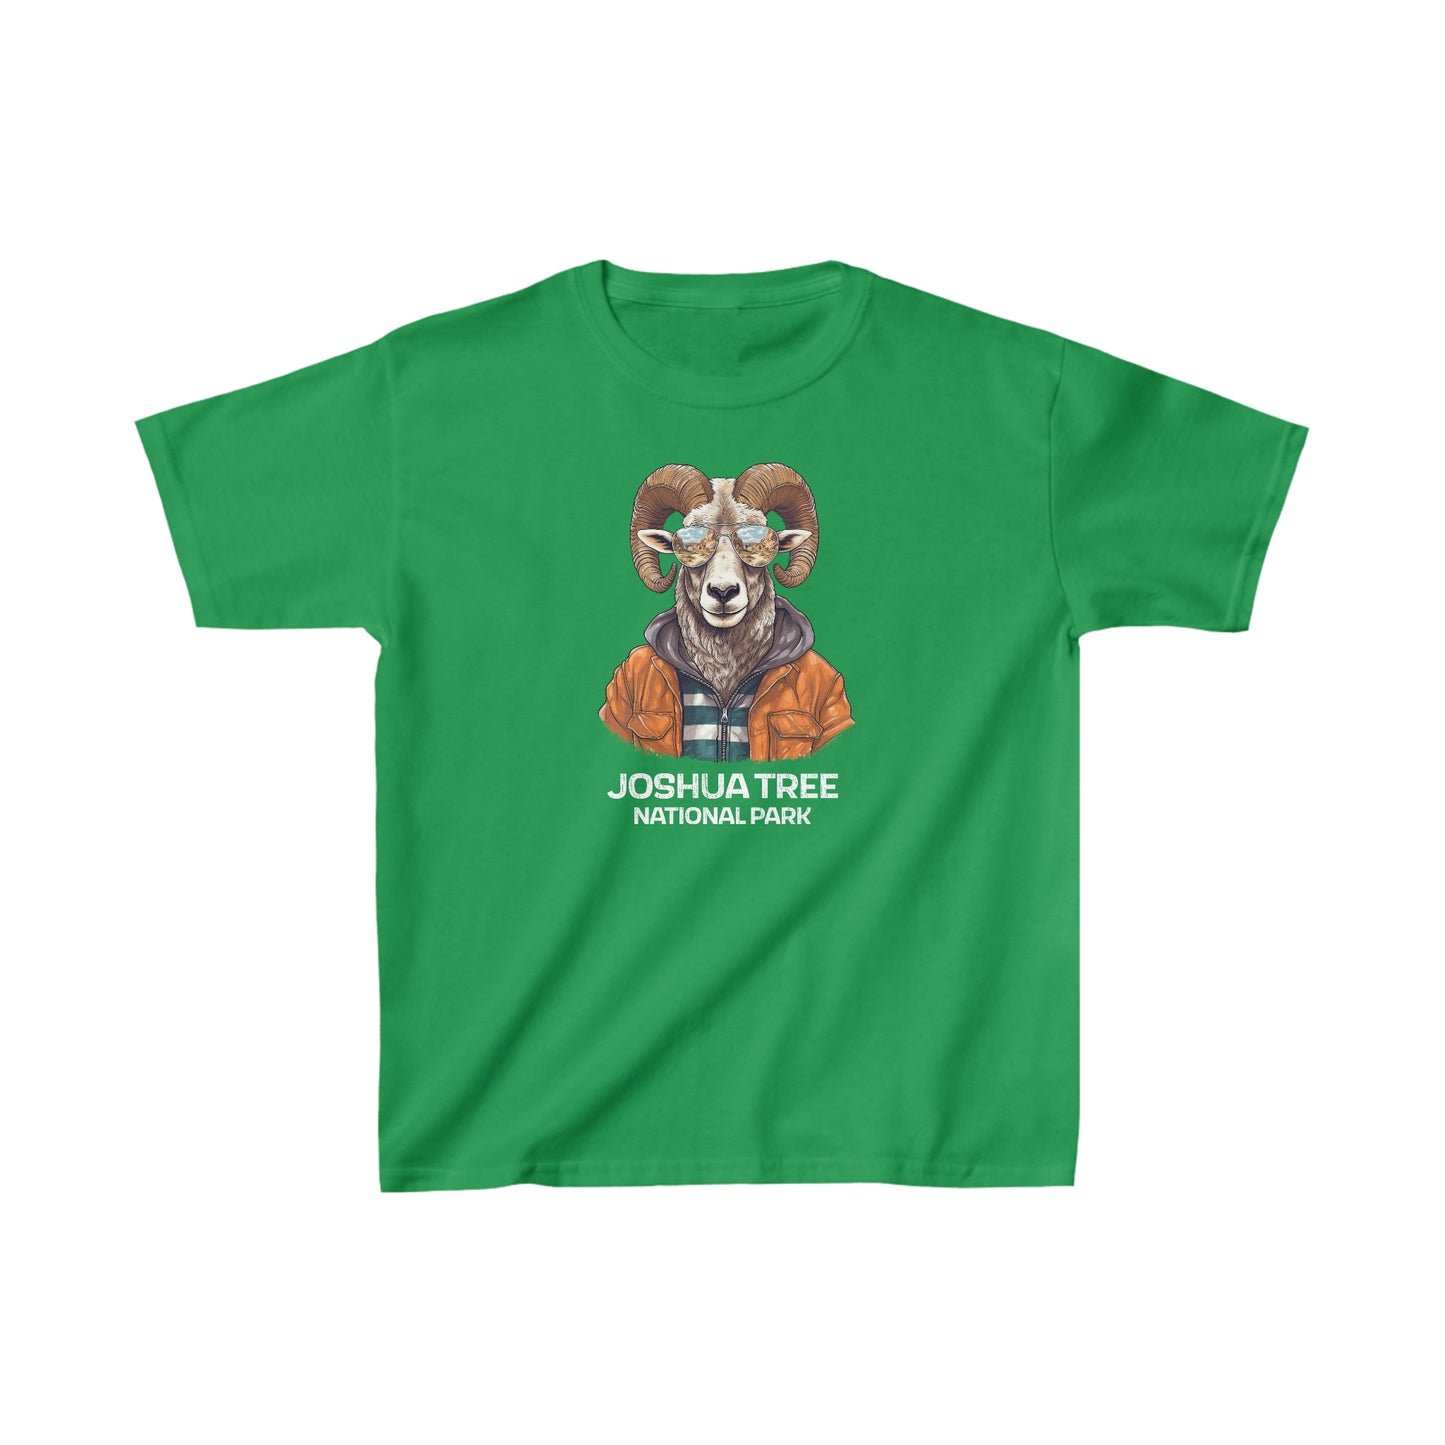 Joshua Tree National Park Child T-Shirt - Cool Bighorn Sheep